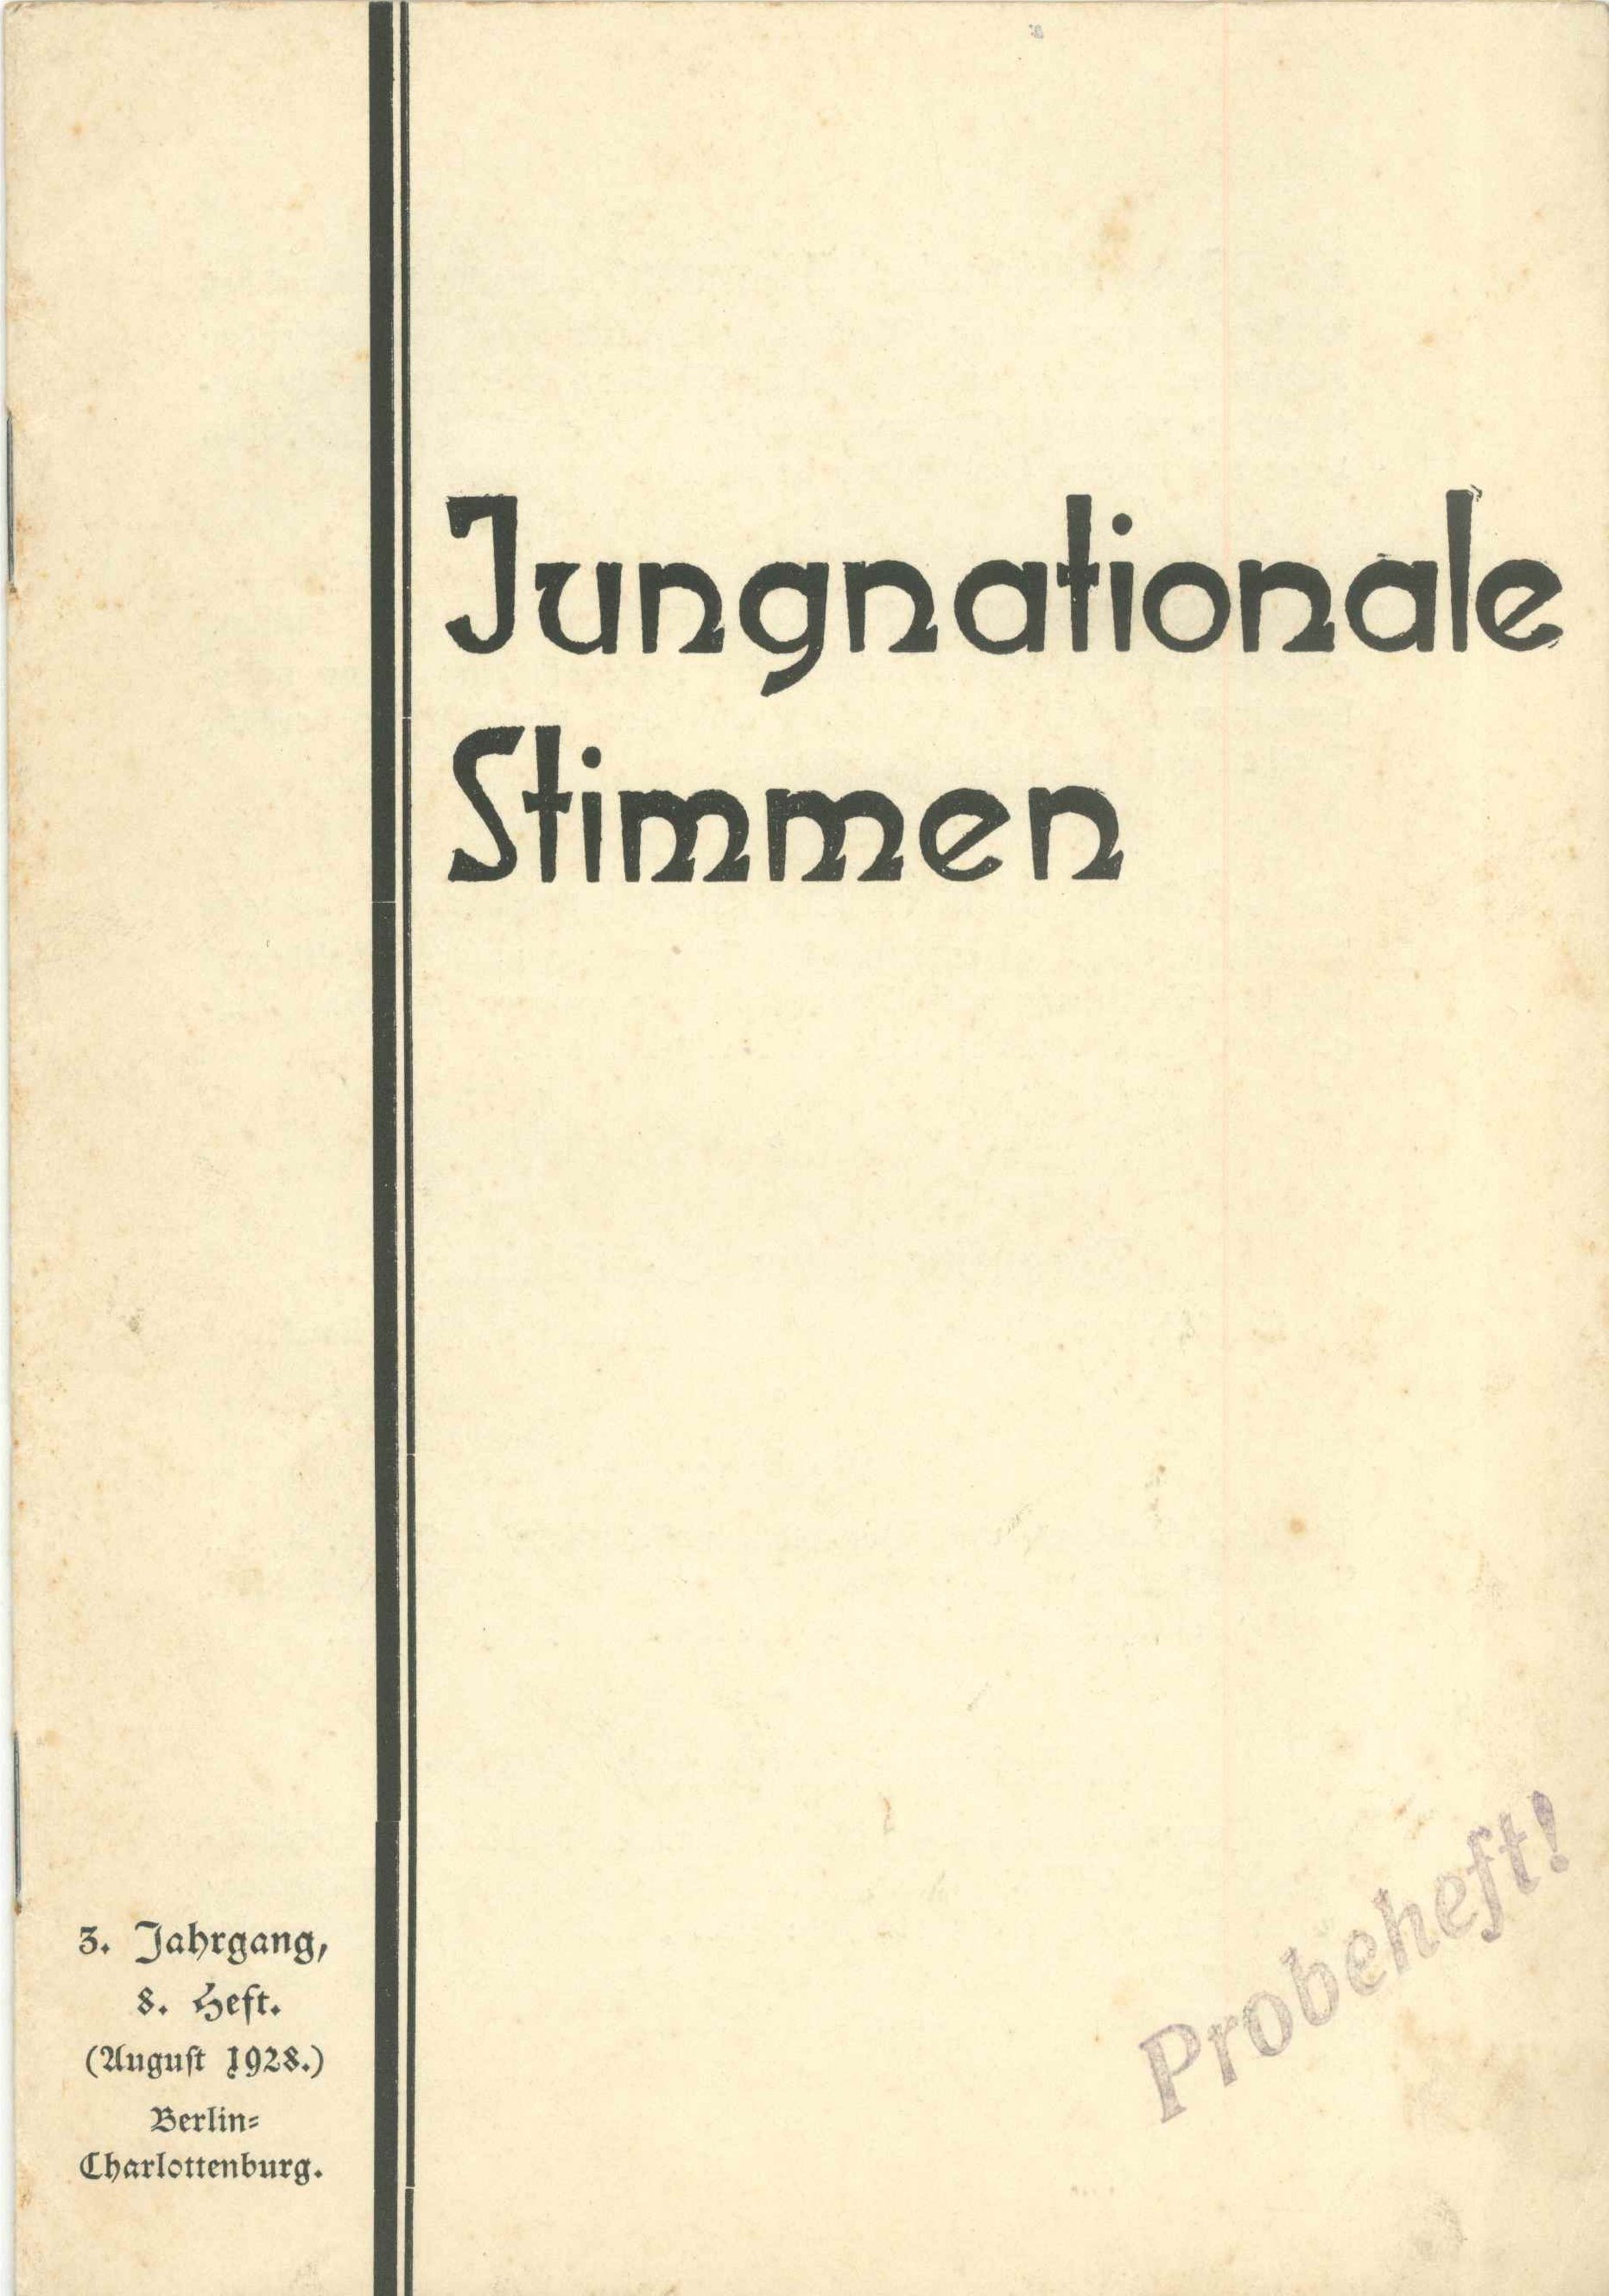 Jungnationale Stimmen (Kurt Tucholsky Literaturmuseum CC BY-NC-SA)